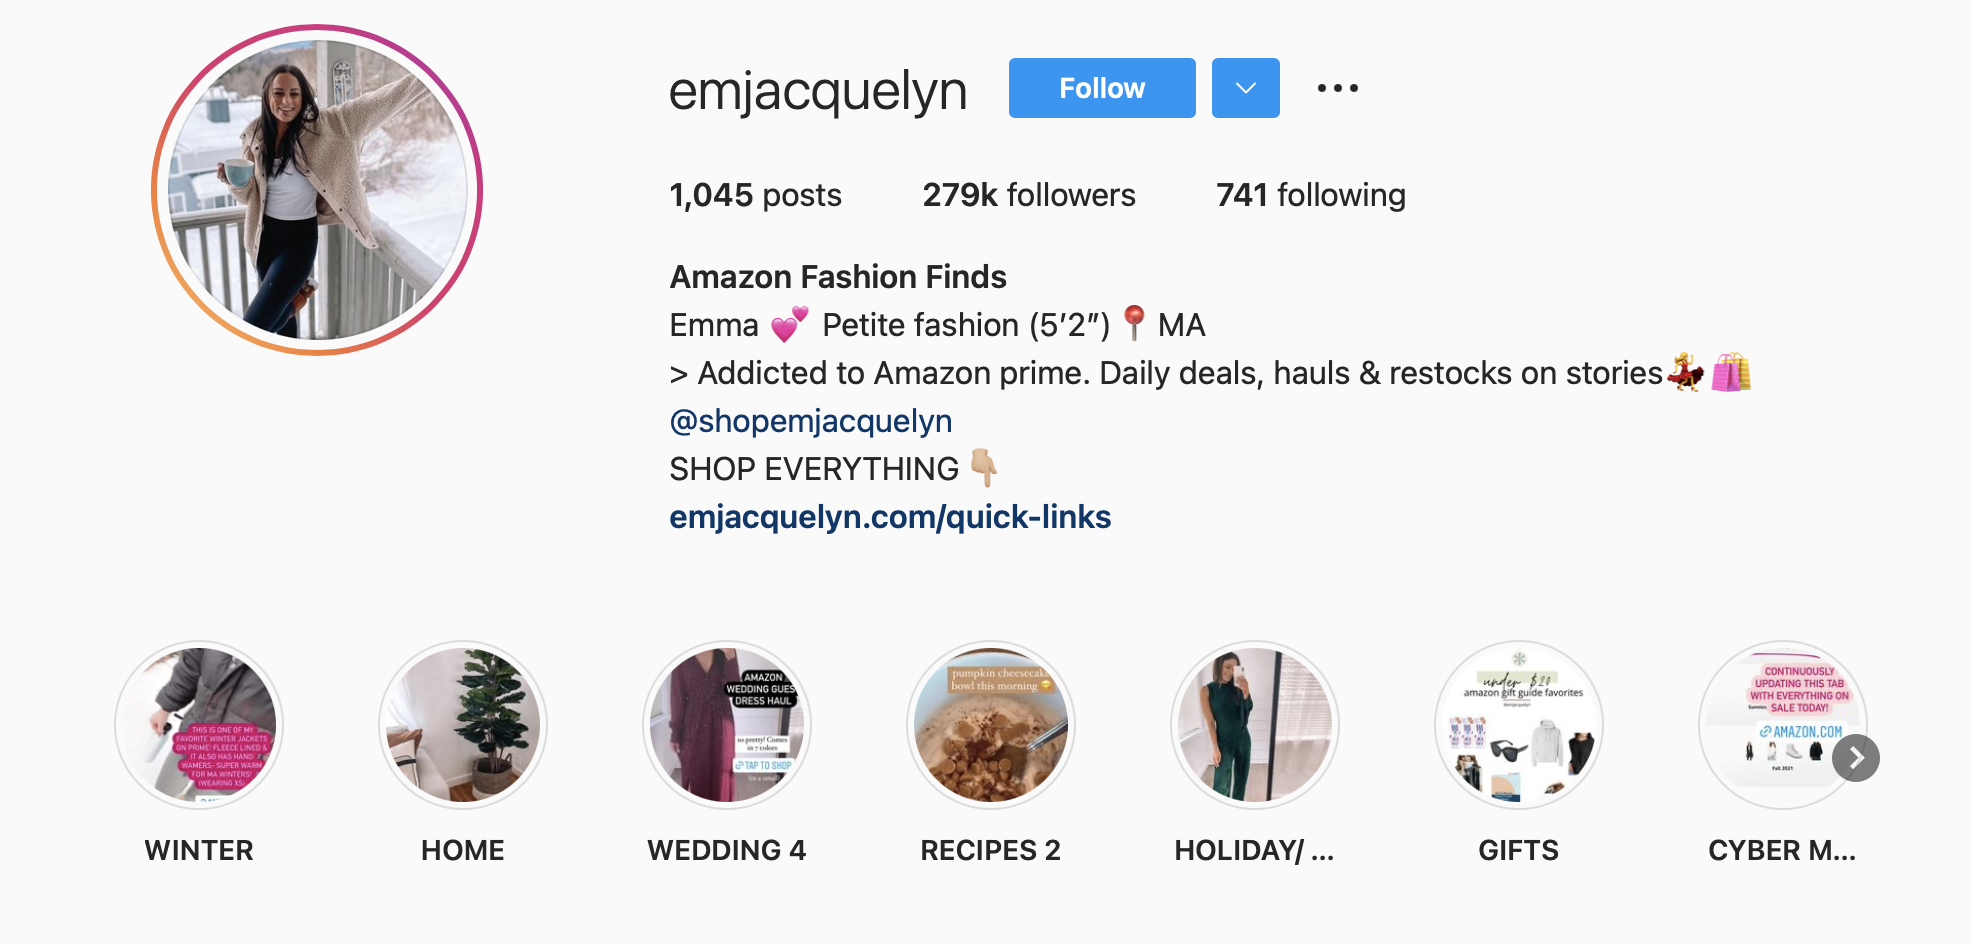 Emjacquelyn - Affordable Fashion Finds